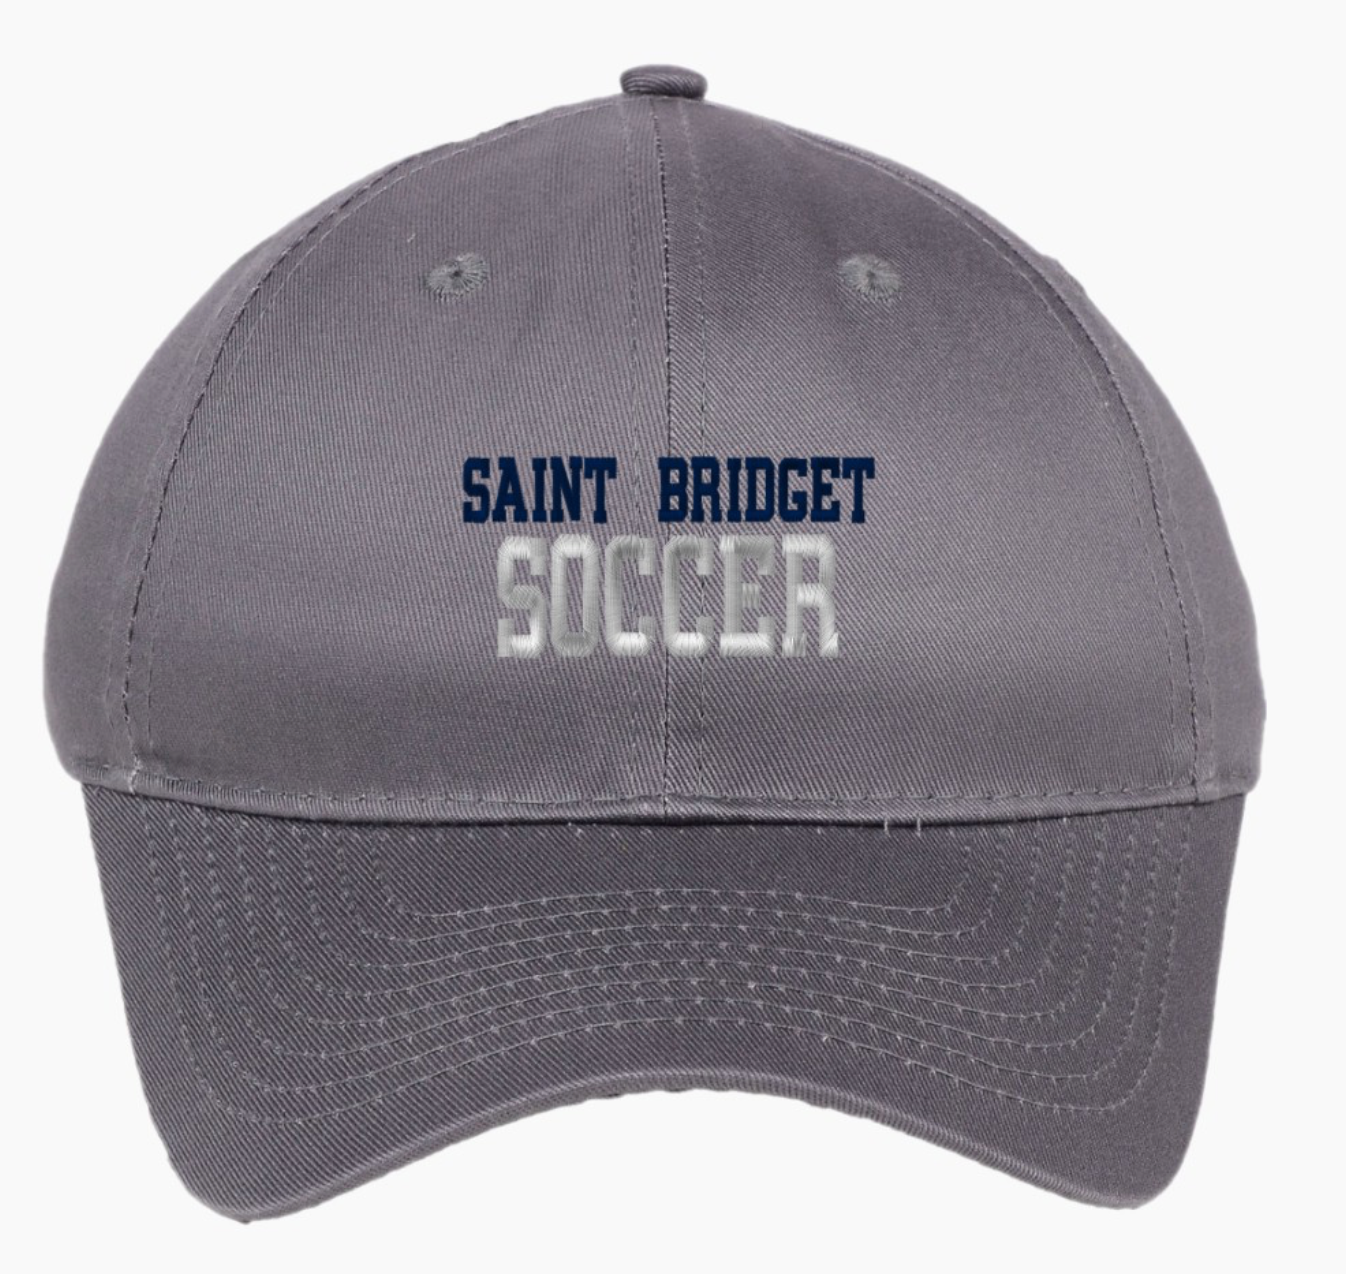 Saint Bridget Soccer -  Port & Company Unstructured Twill Cap